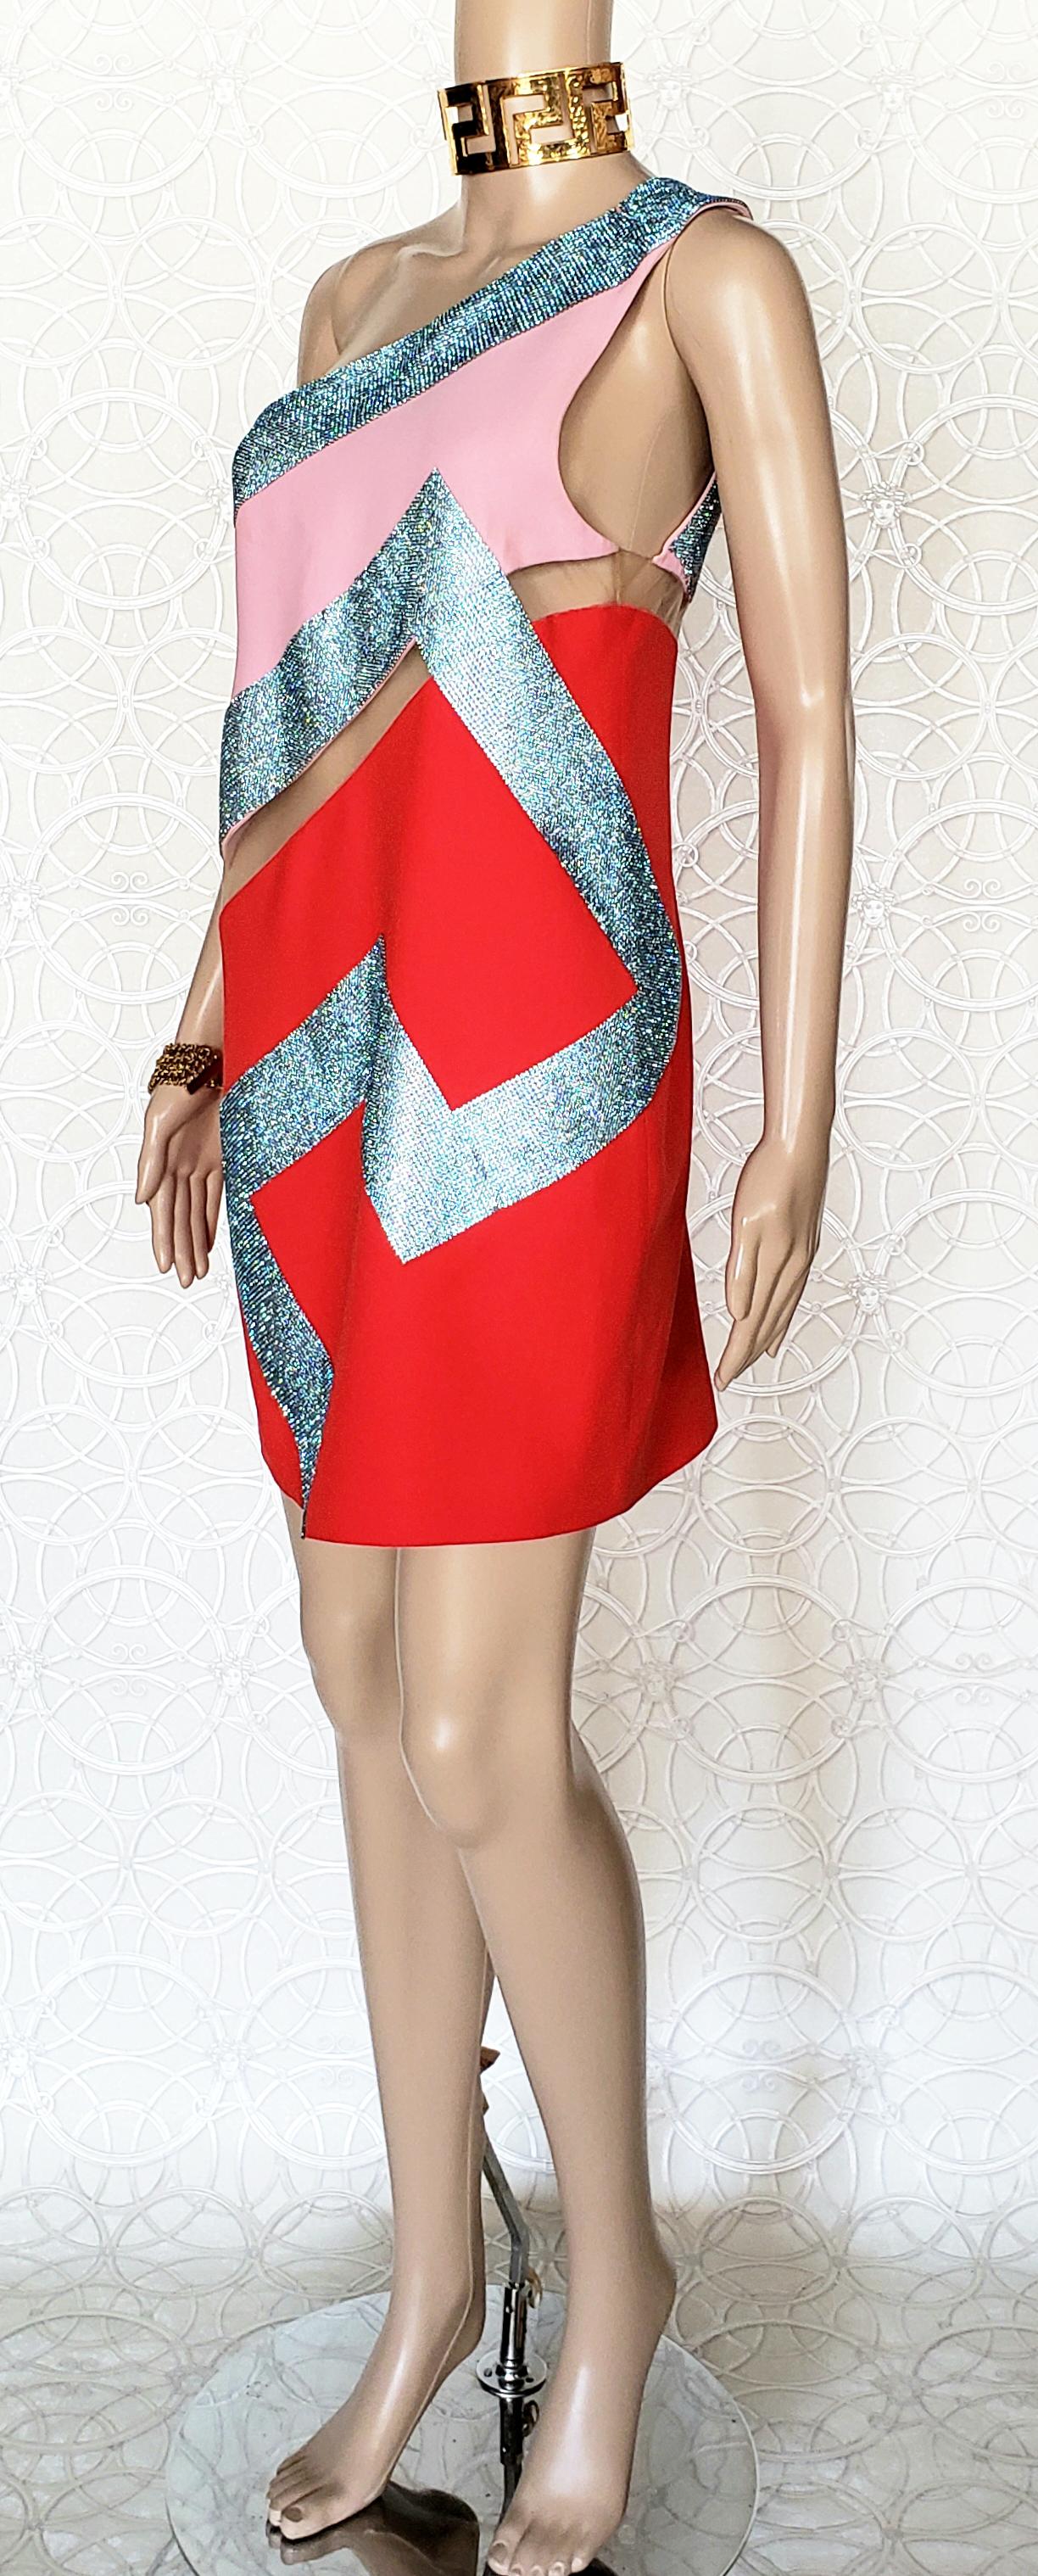 Women's S/S 2015 look # 39 NEW VERSACE SWAROVSKI CRYSTAL EMBELLISHED MINI Dress 38 - 2 For Sale